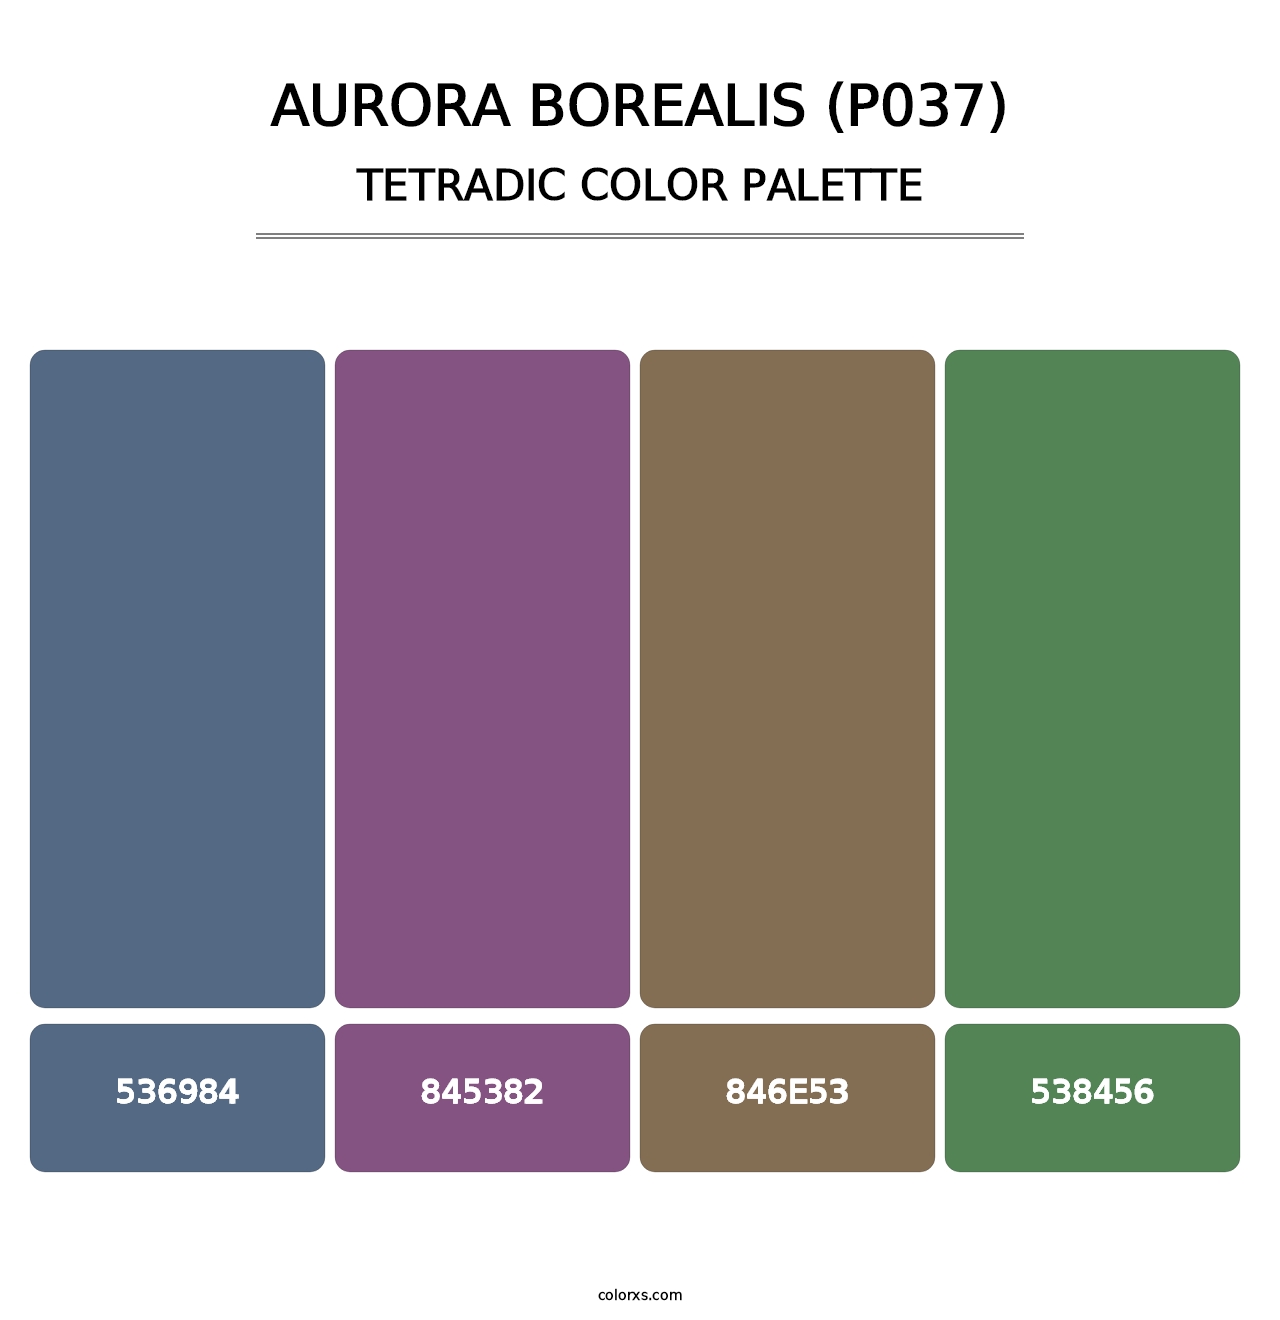 Aurora Borealis (P037) - Tetradic Color Palette